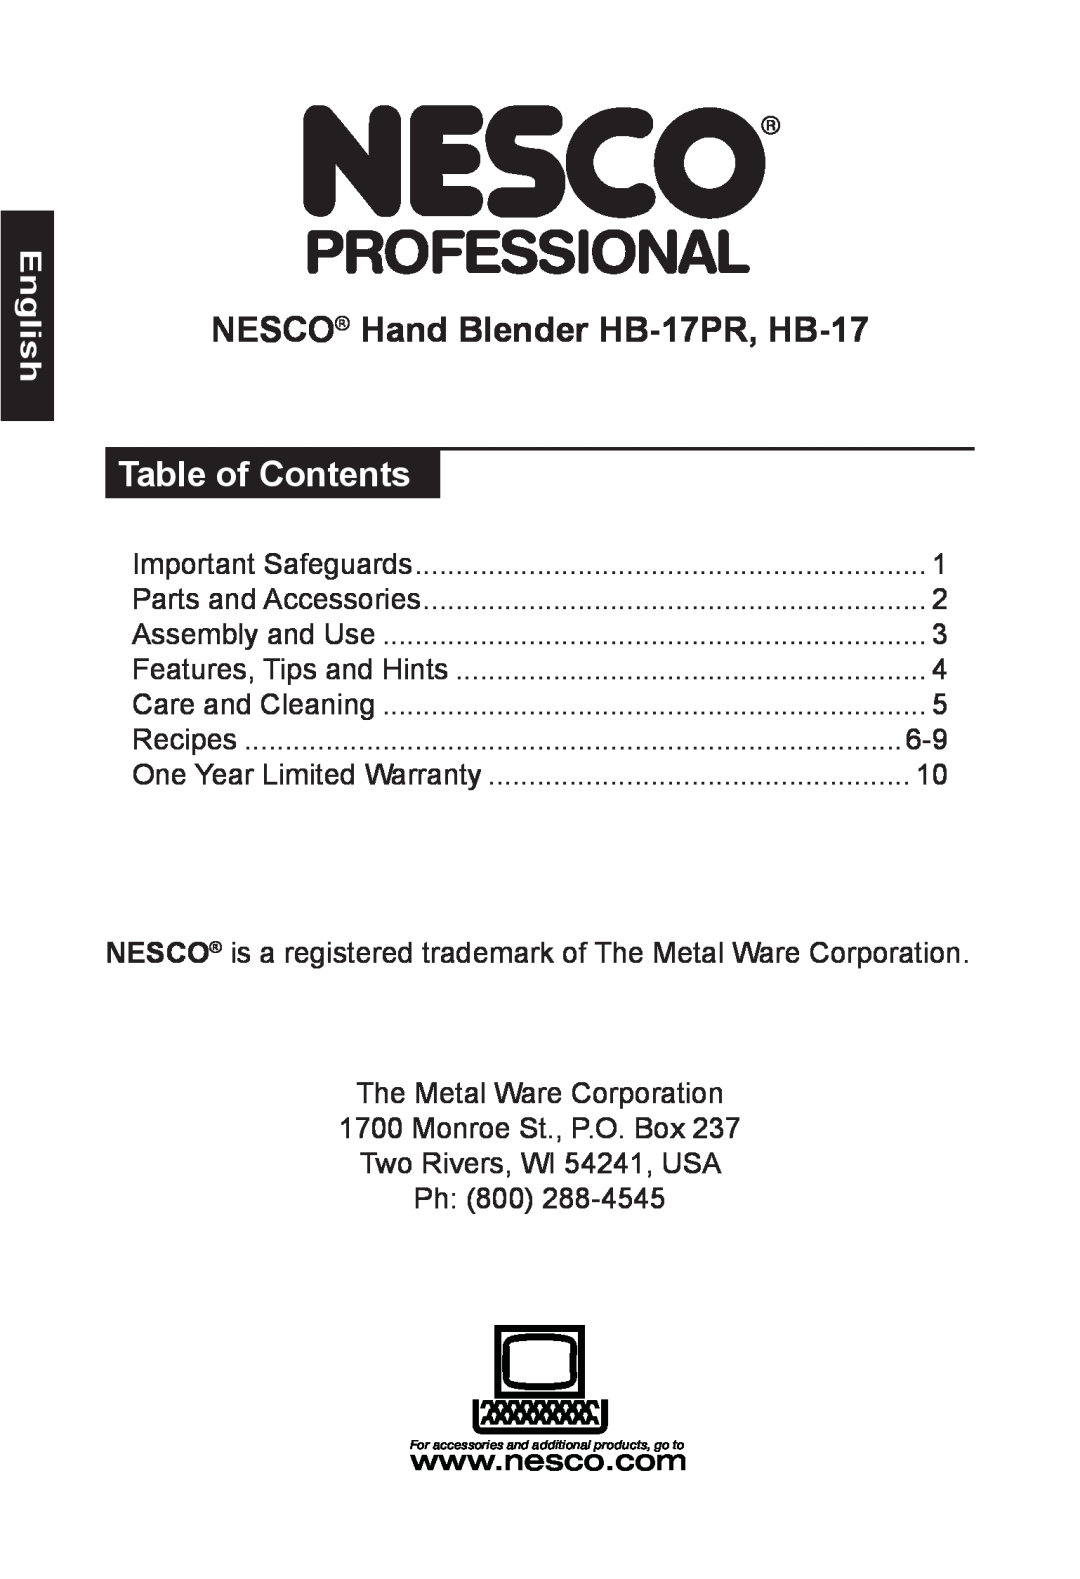 Nesco manual English, Table of Contents, NESCO Hand Blender HB-17PR, HB-17 